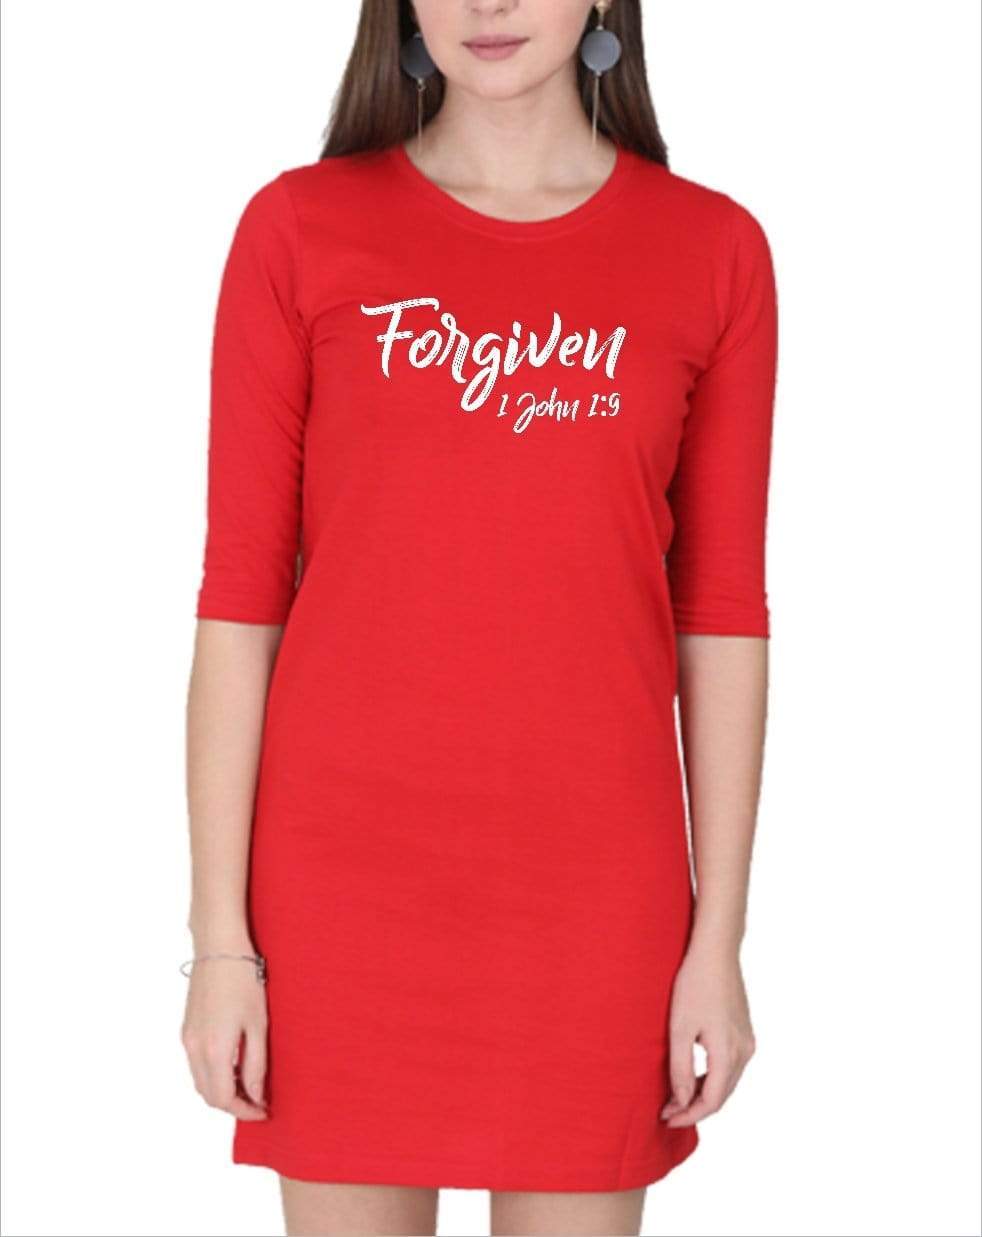 Living Words Women Round Neck T Shirt S / Red Forgiven 1 John 1:9